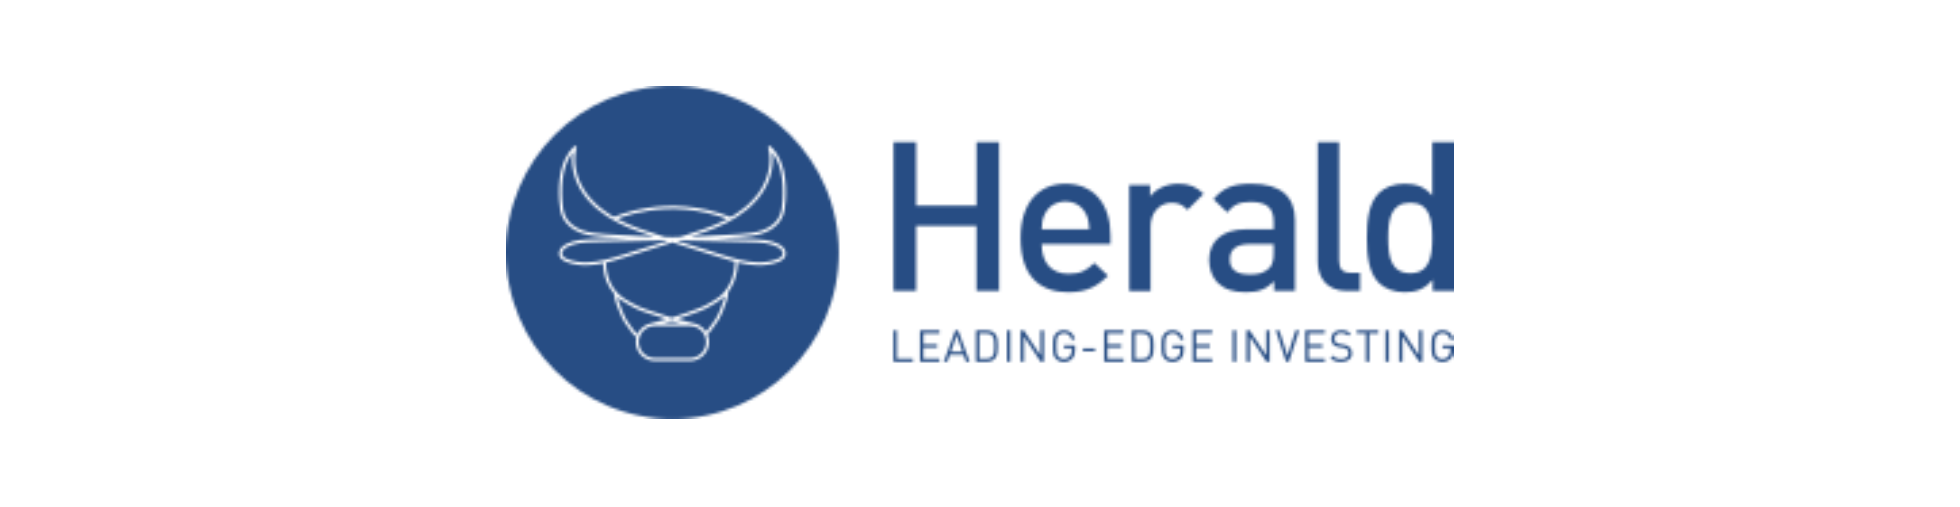 Herald Investment Management 